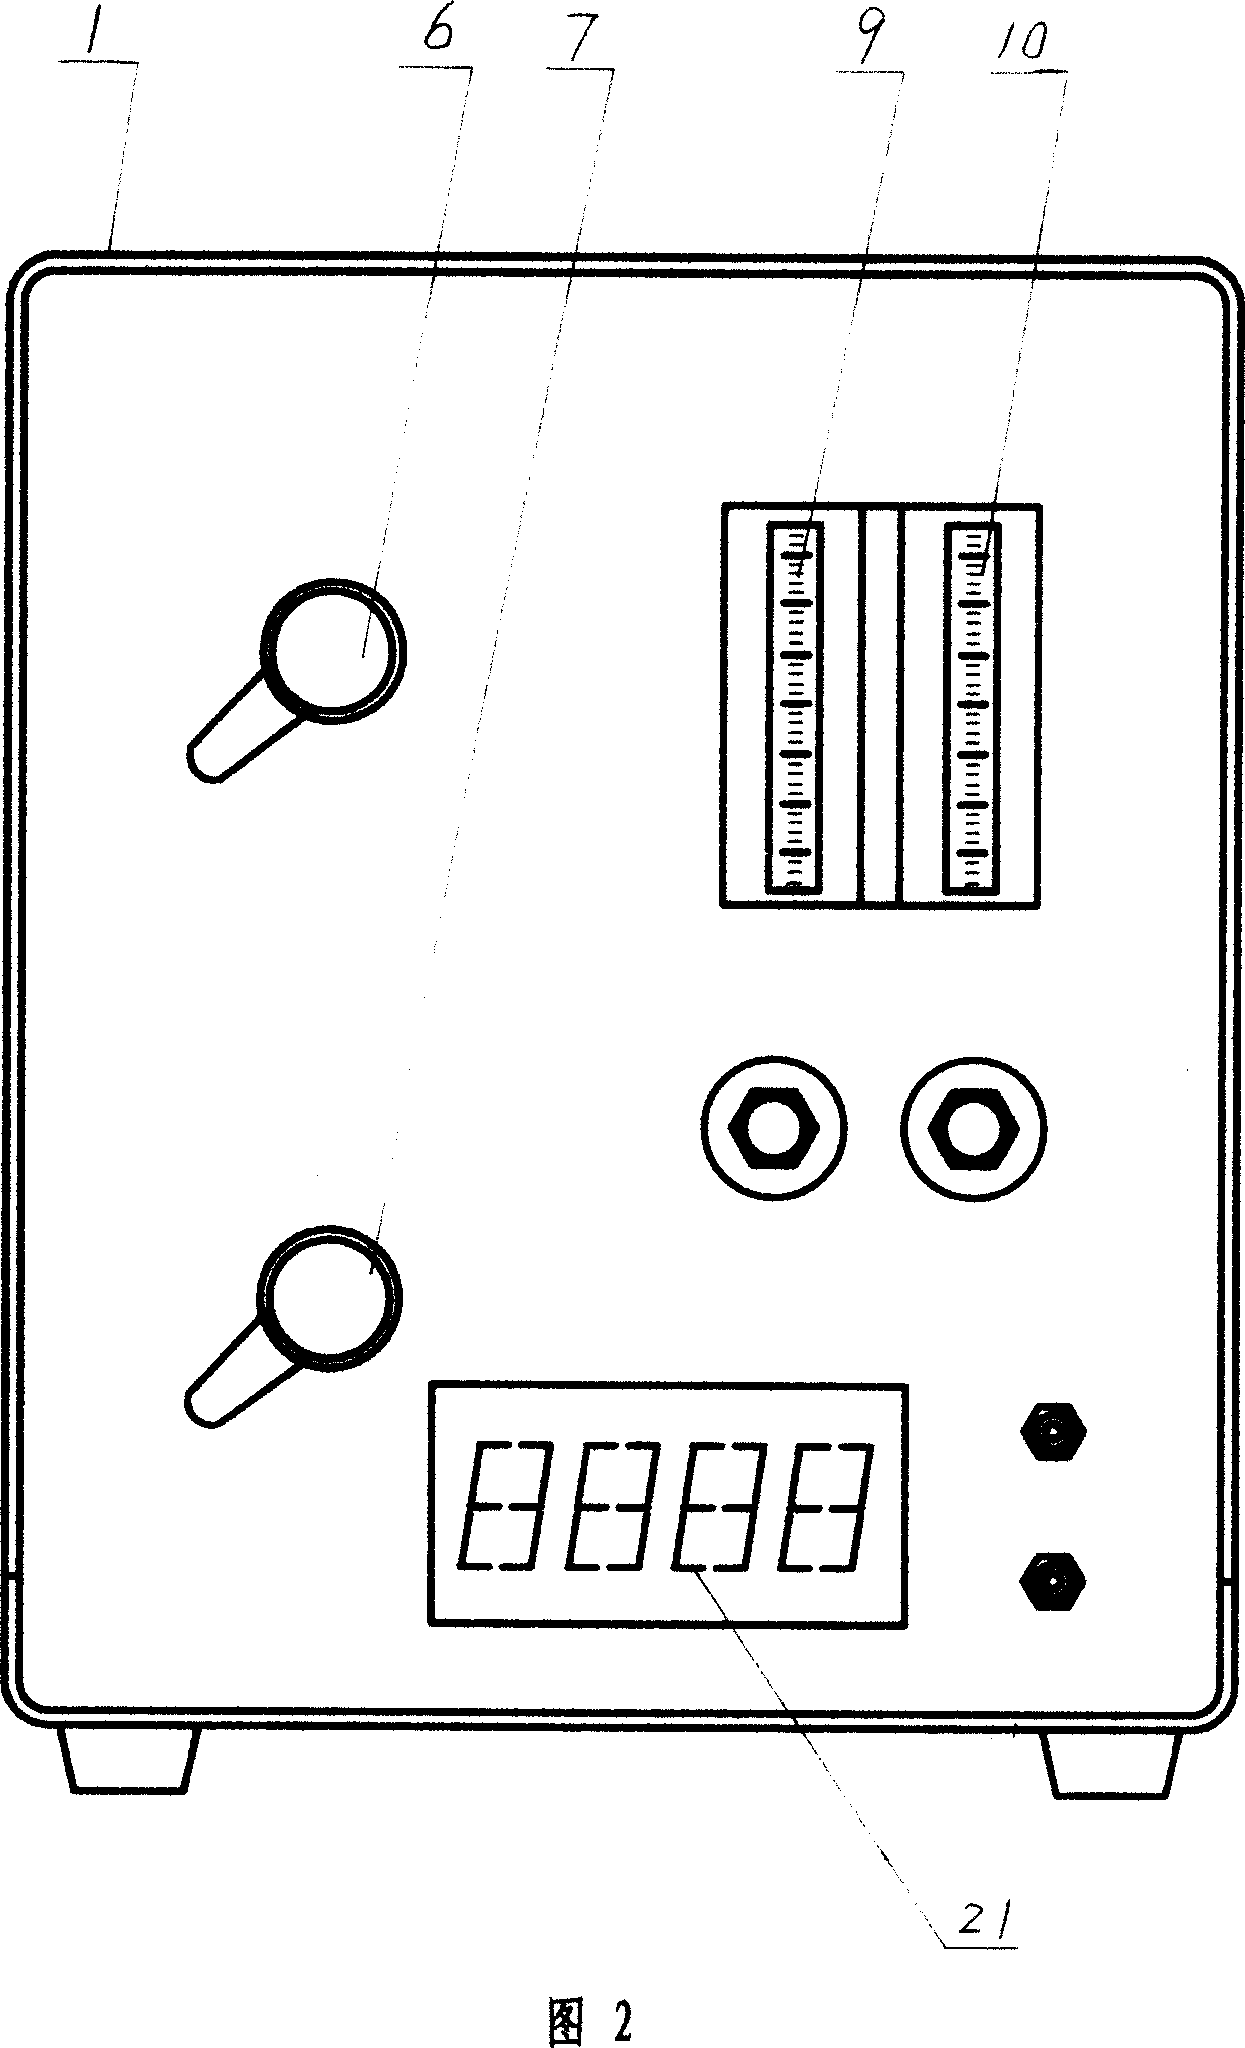 Manual type device for sampling quantitative gas